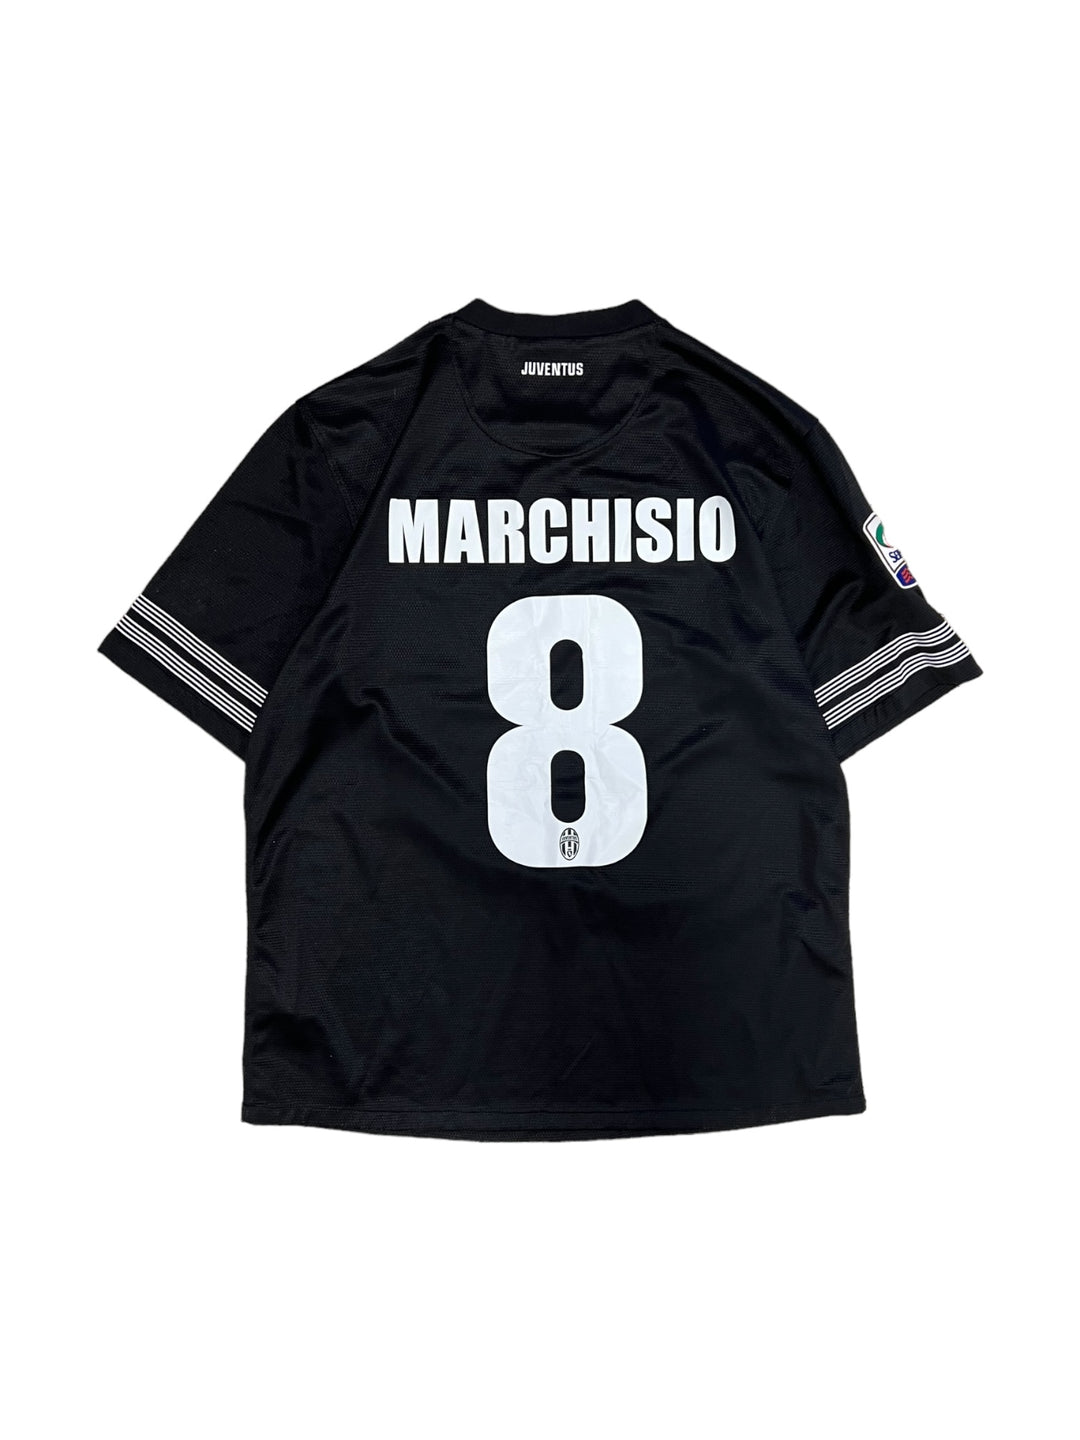 Nike Marchisio Official Juventus jersey Men’s Medium